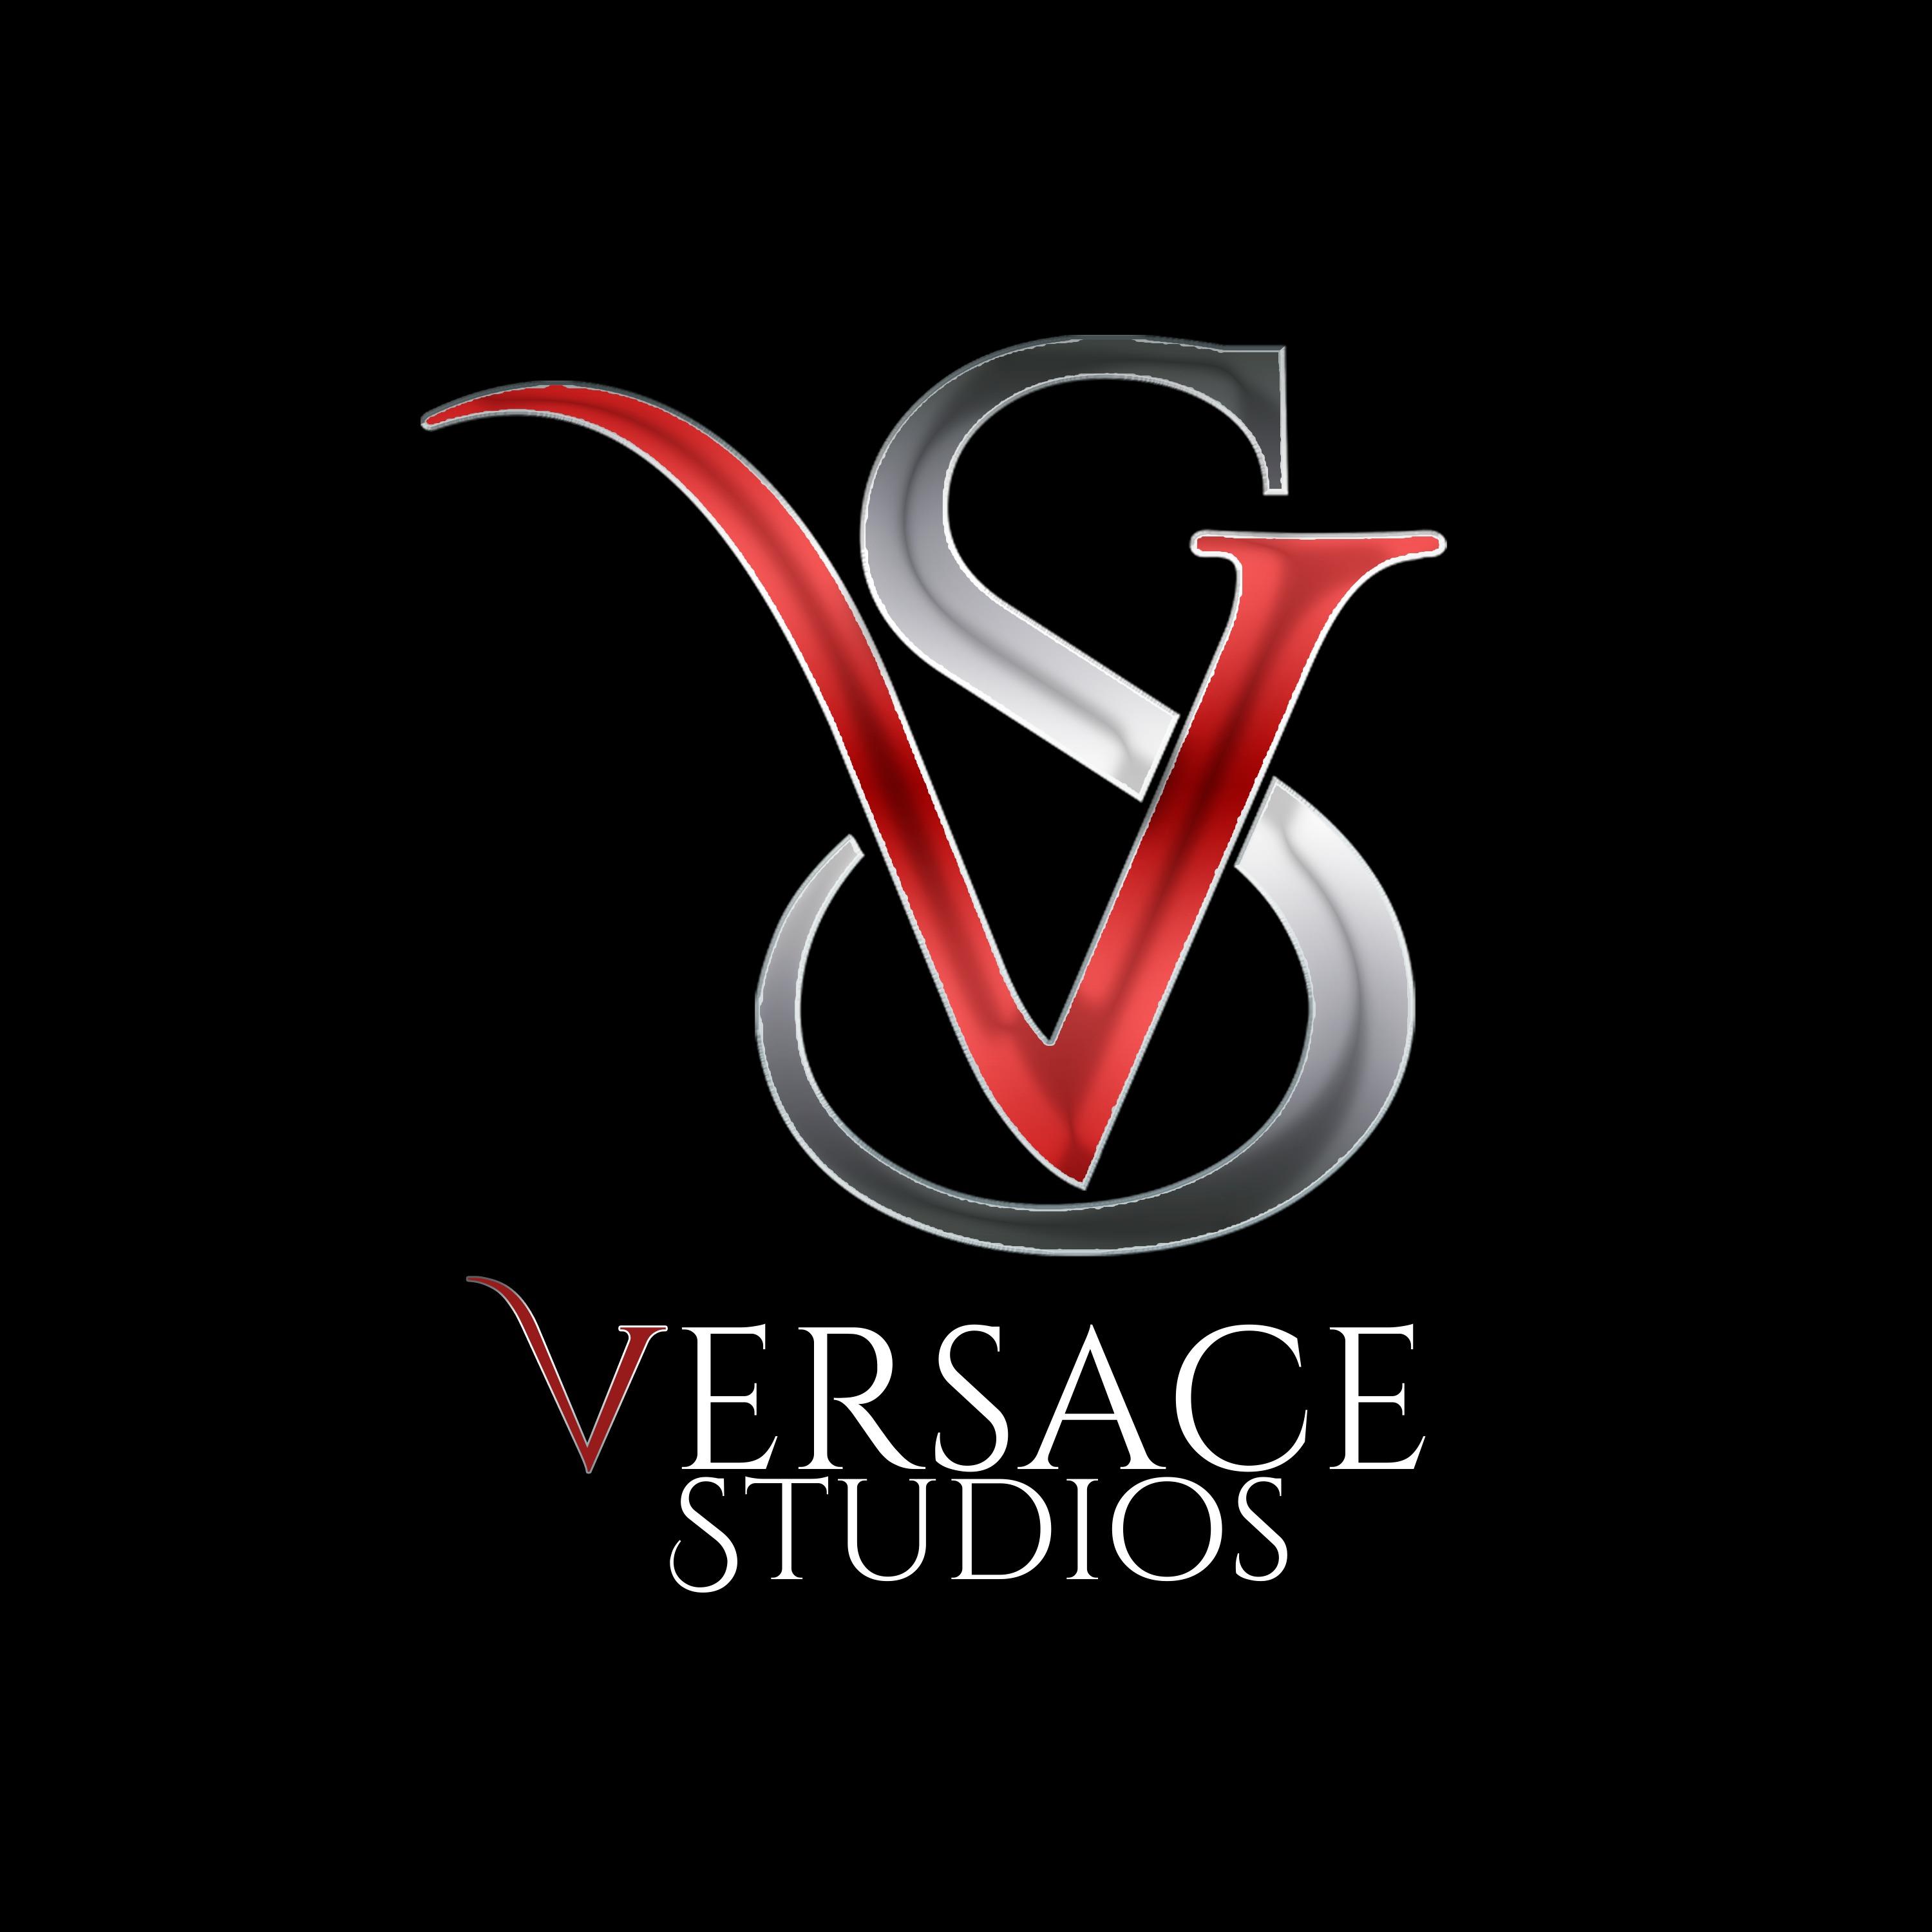 Versace Studios International  - Photo Talk Show